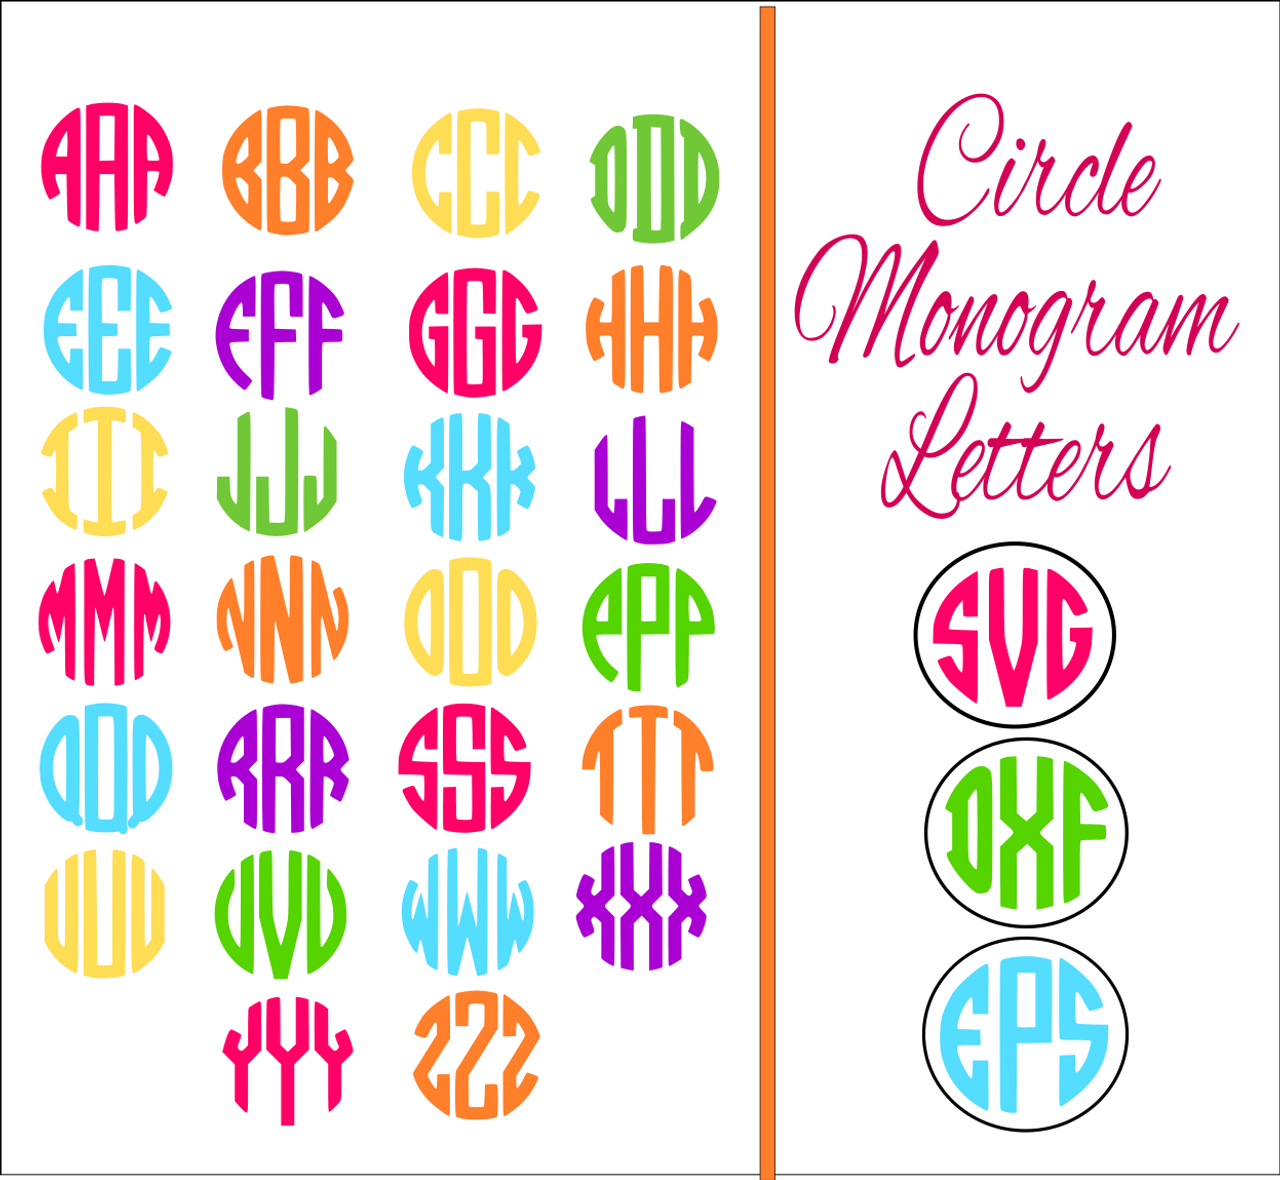 Download SVG - Circle Monogram Alphabet Letters - Catching Colorflies